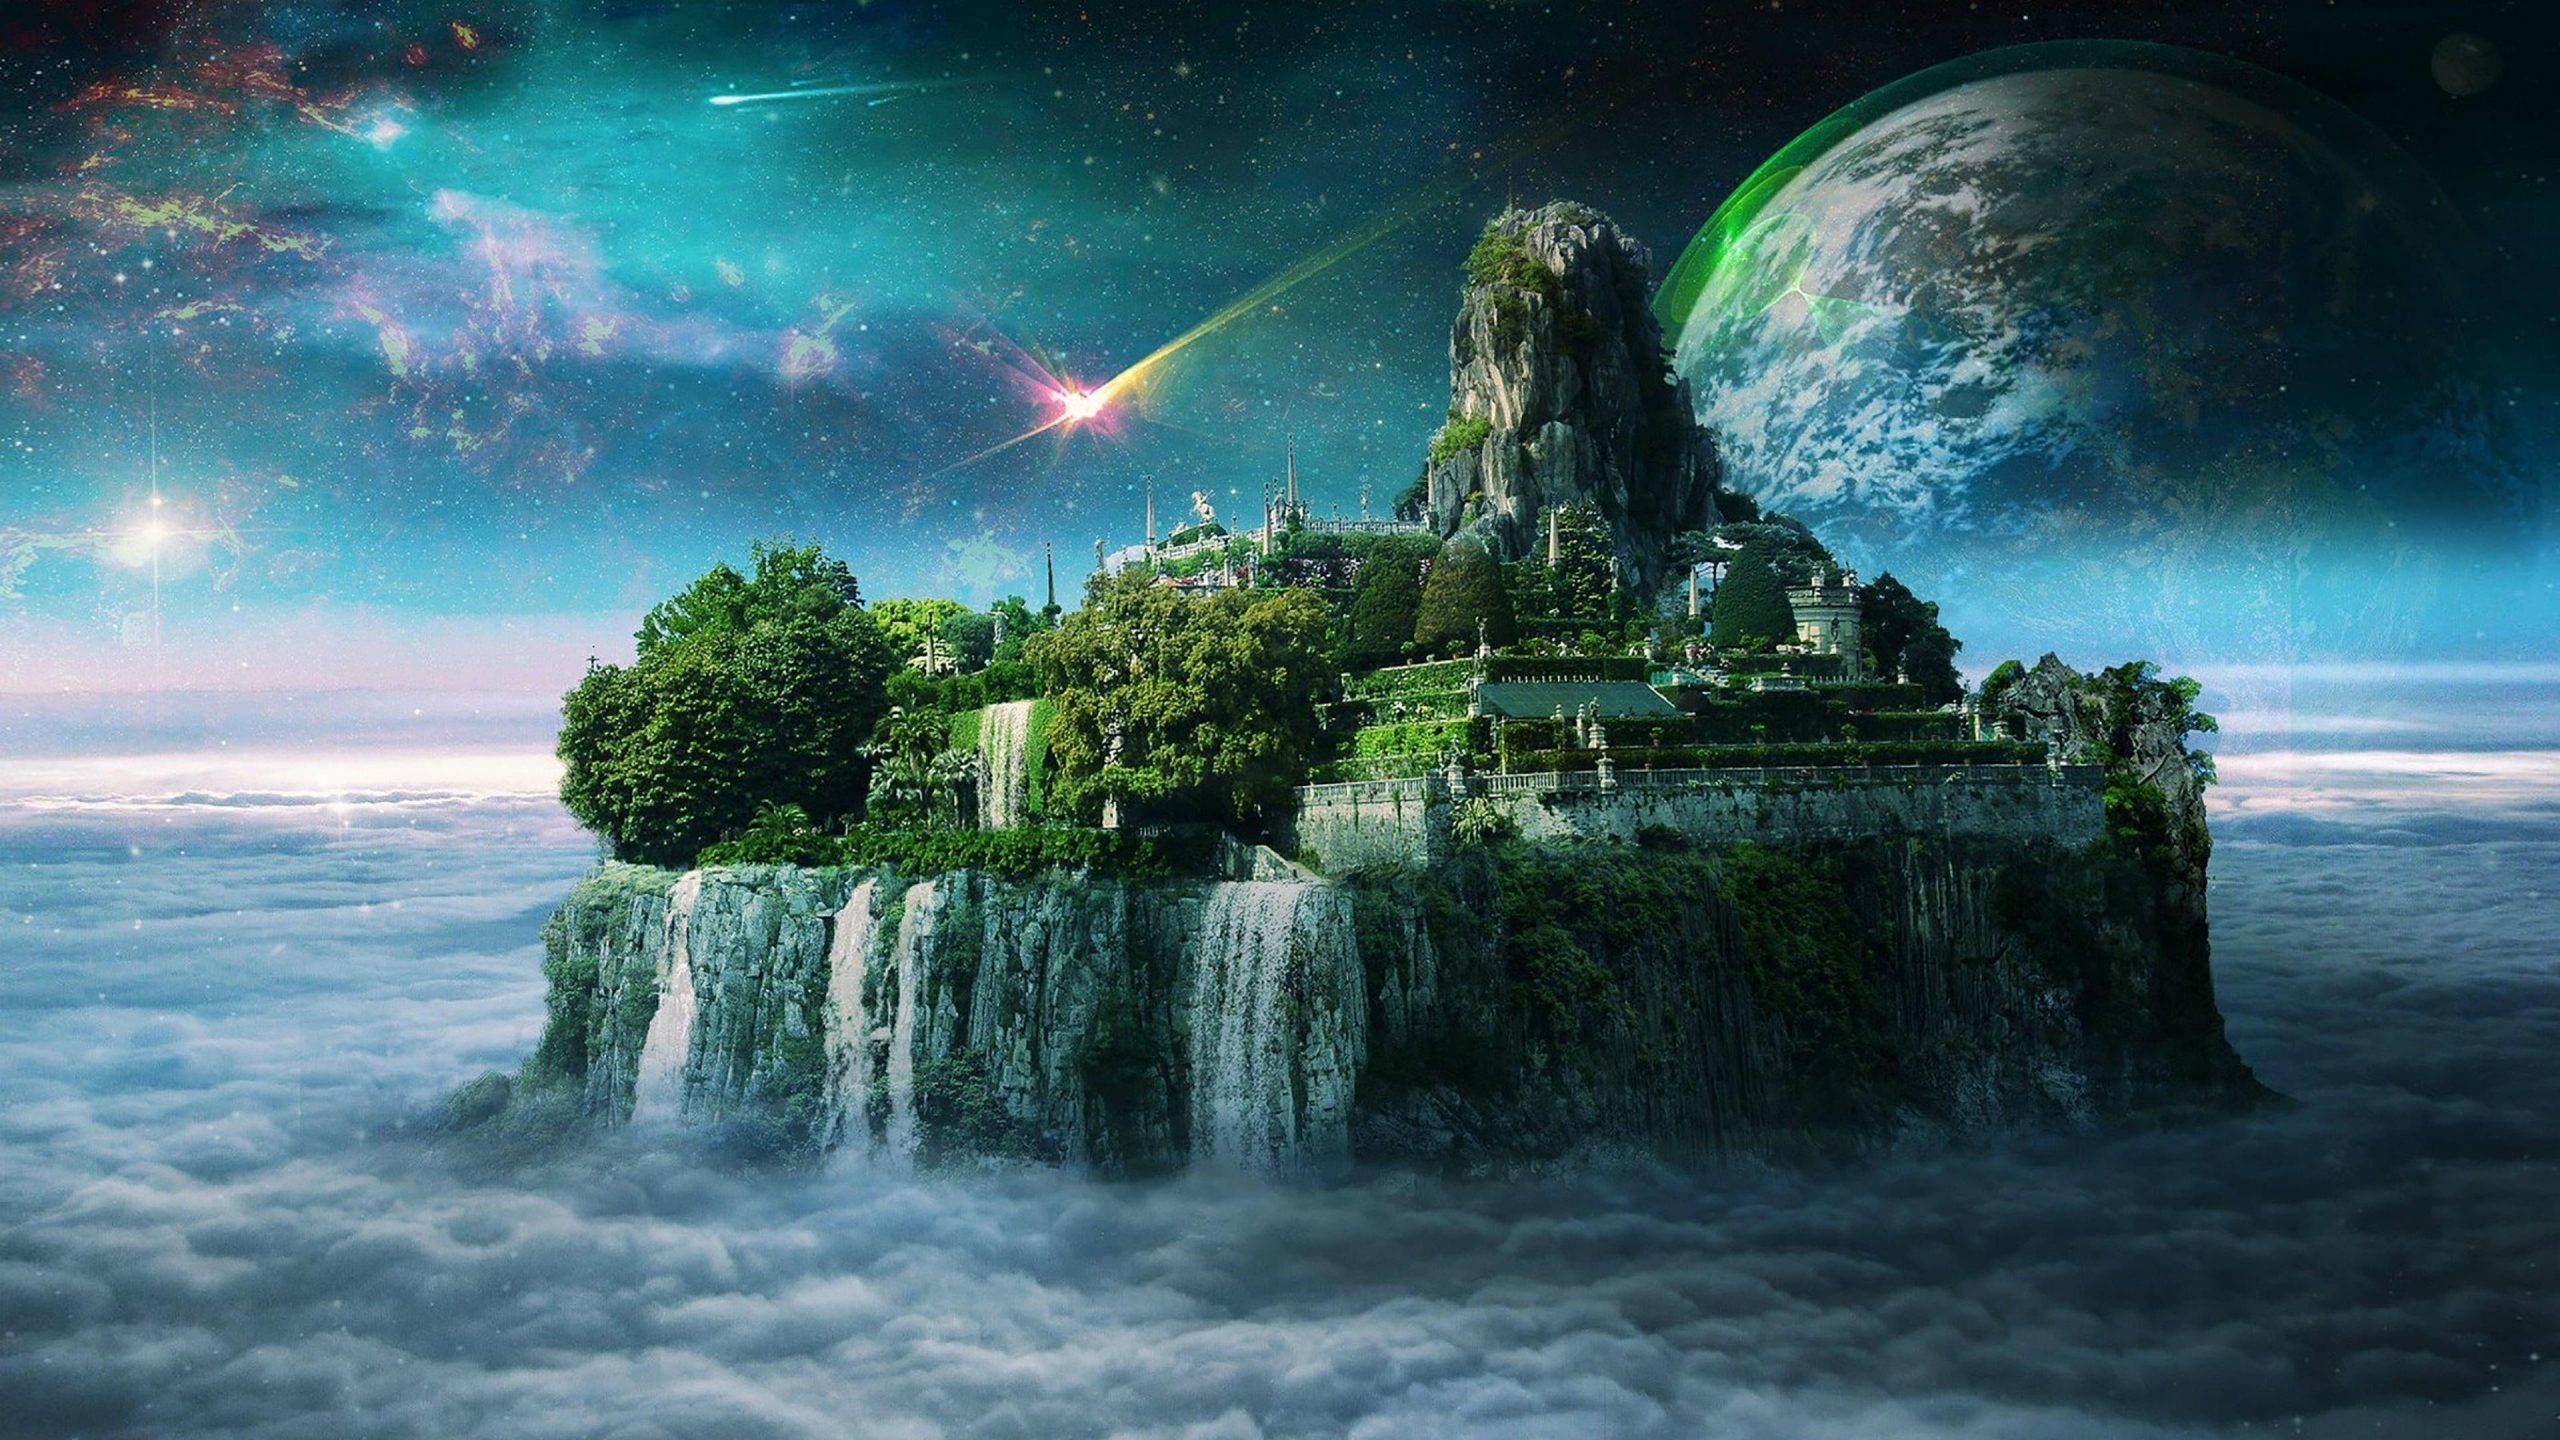 Fantasy art wallpaper, space art, waterfall, island, castle, city, sky • Wallpaper For You HD Wallpaper For Desktop & Mobile